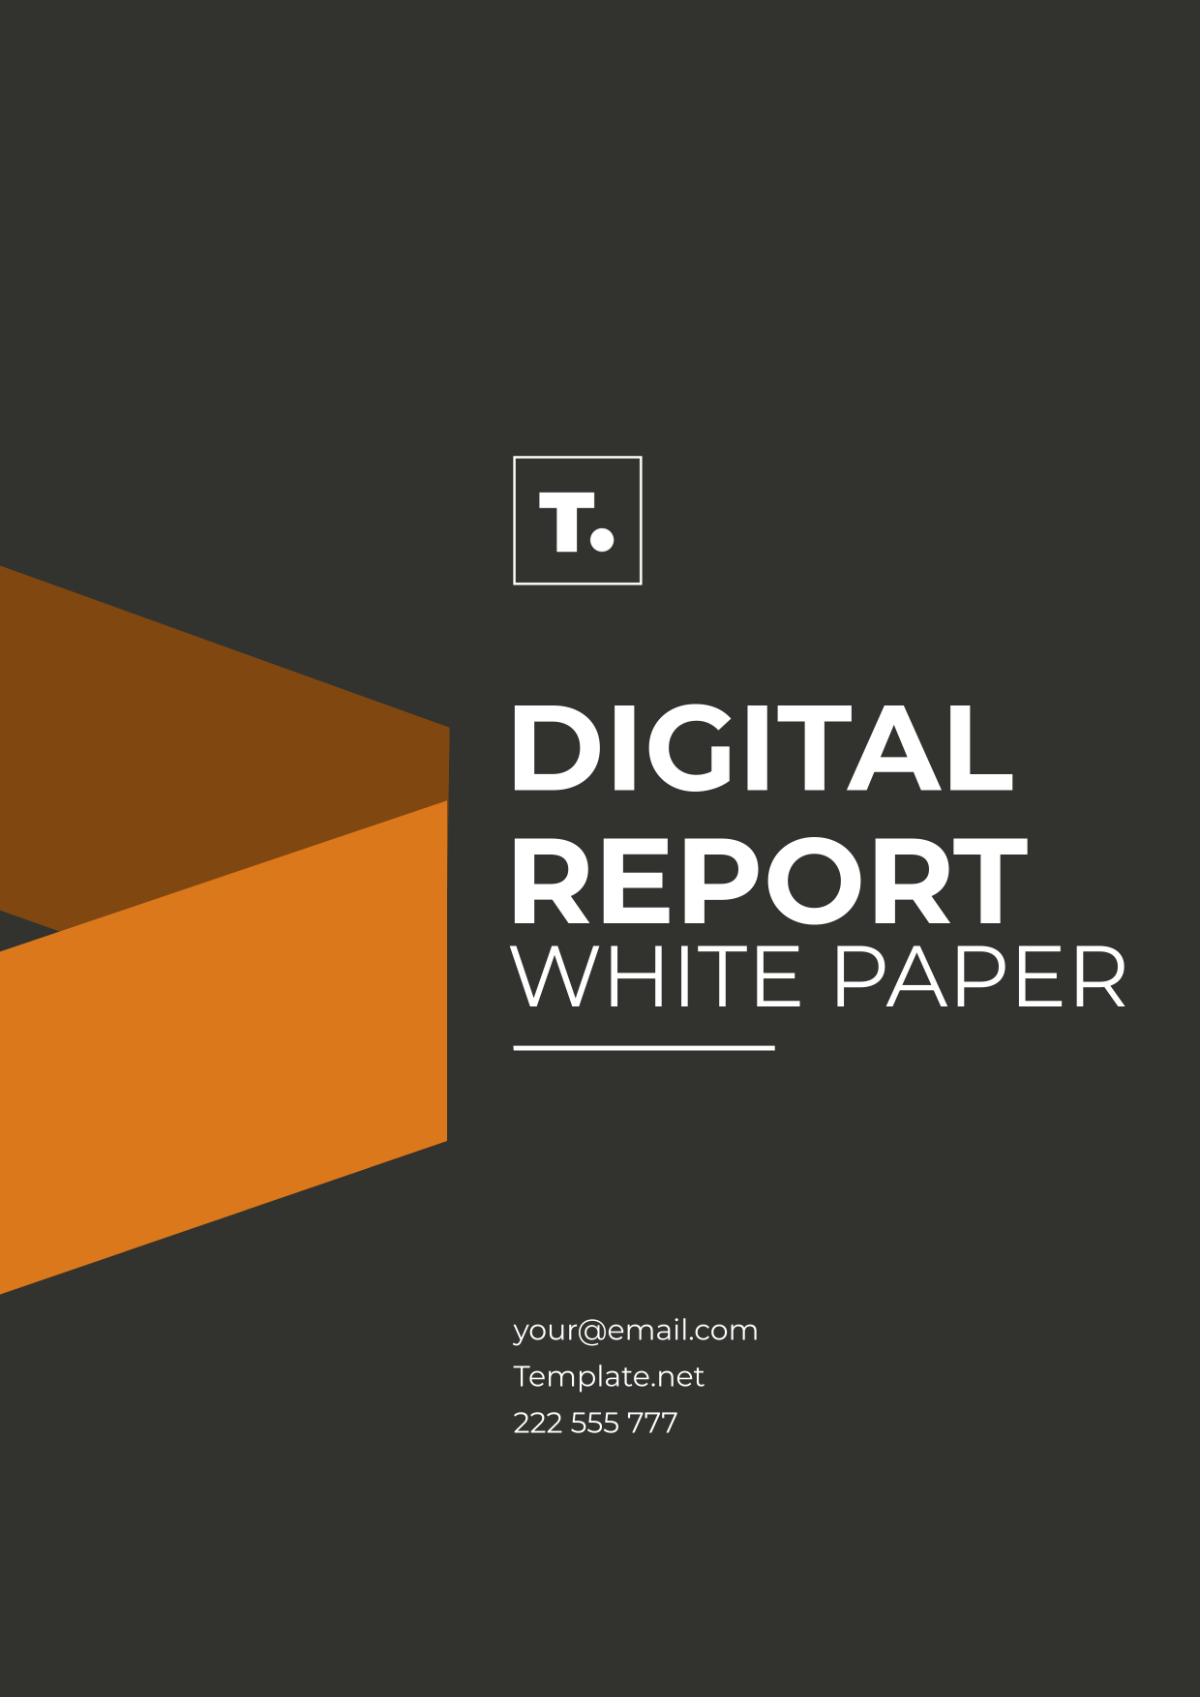 Digital Report White Paper Template